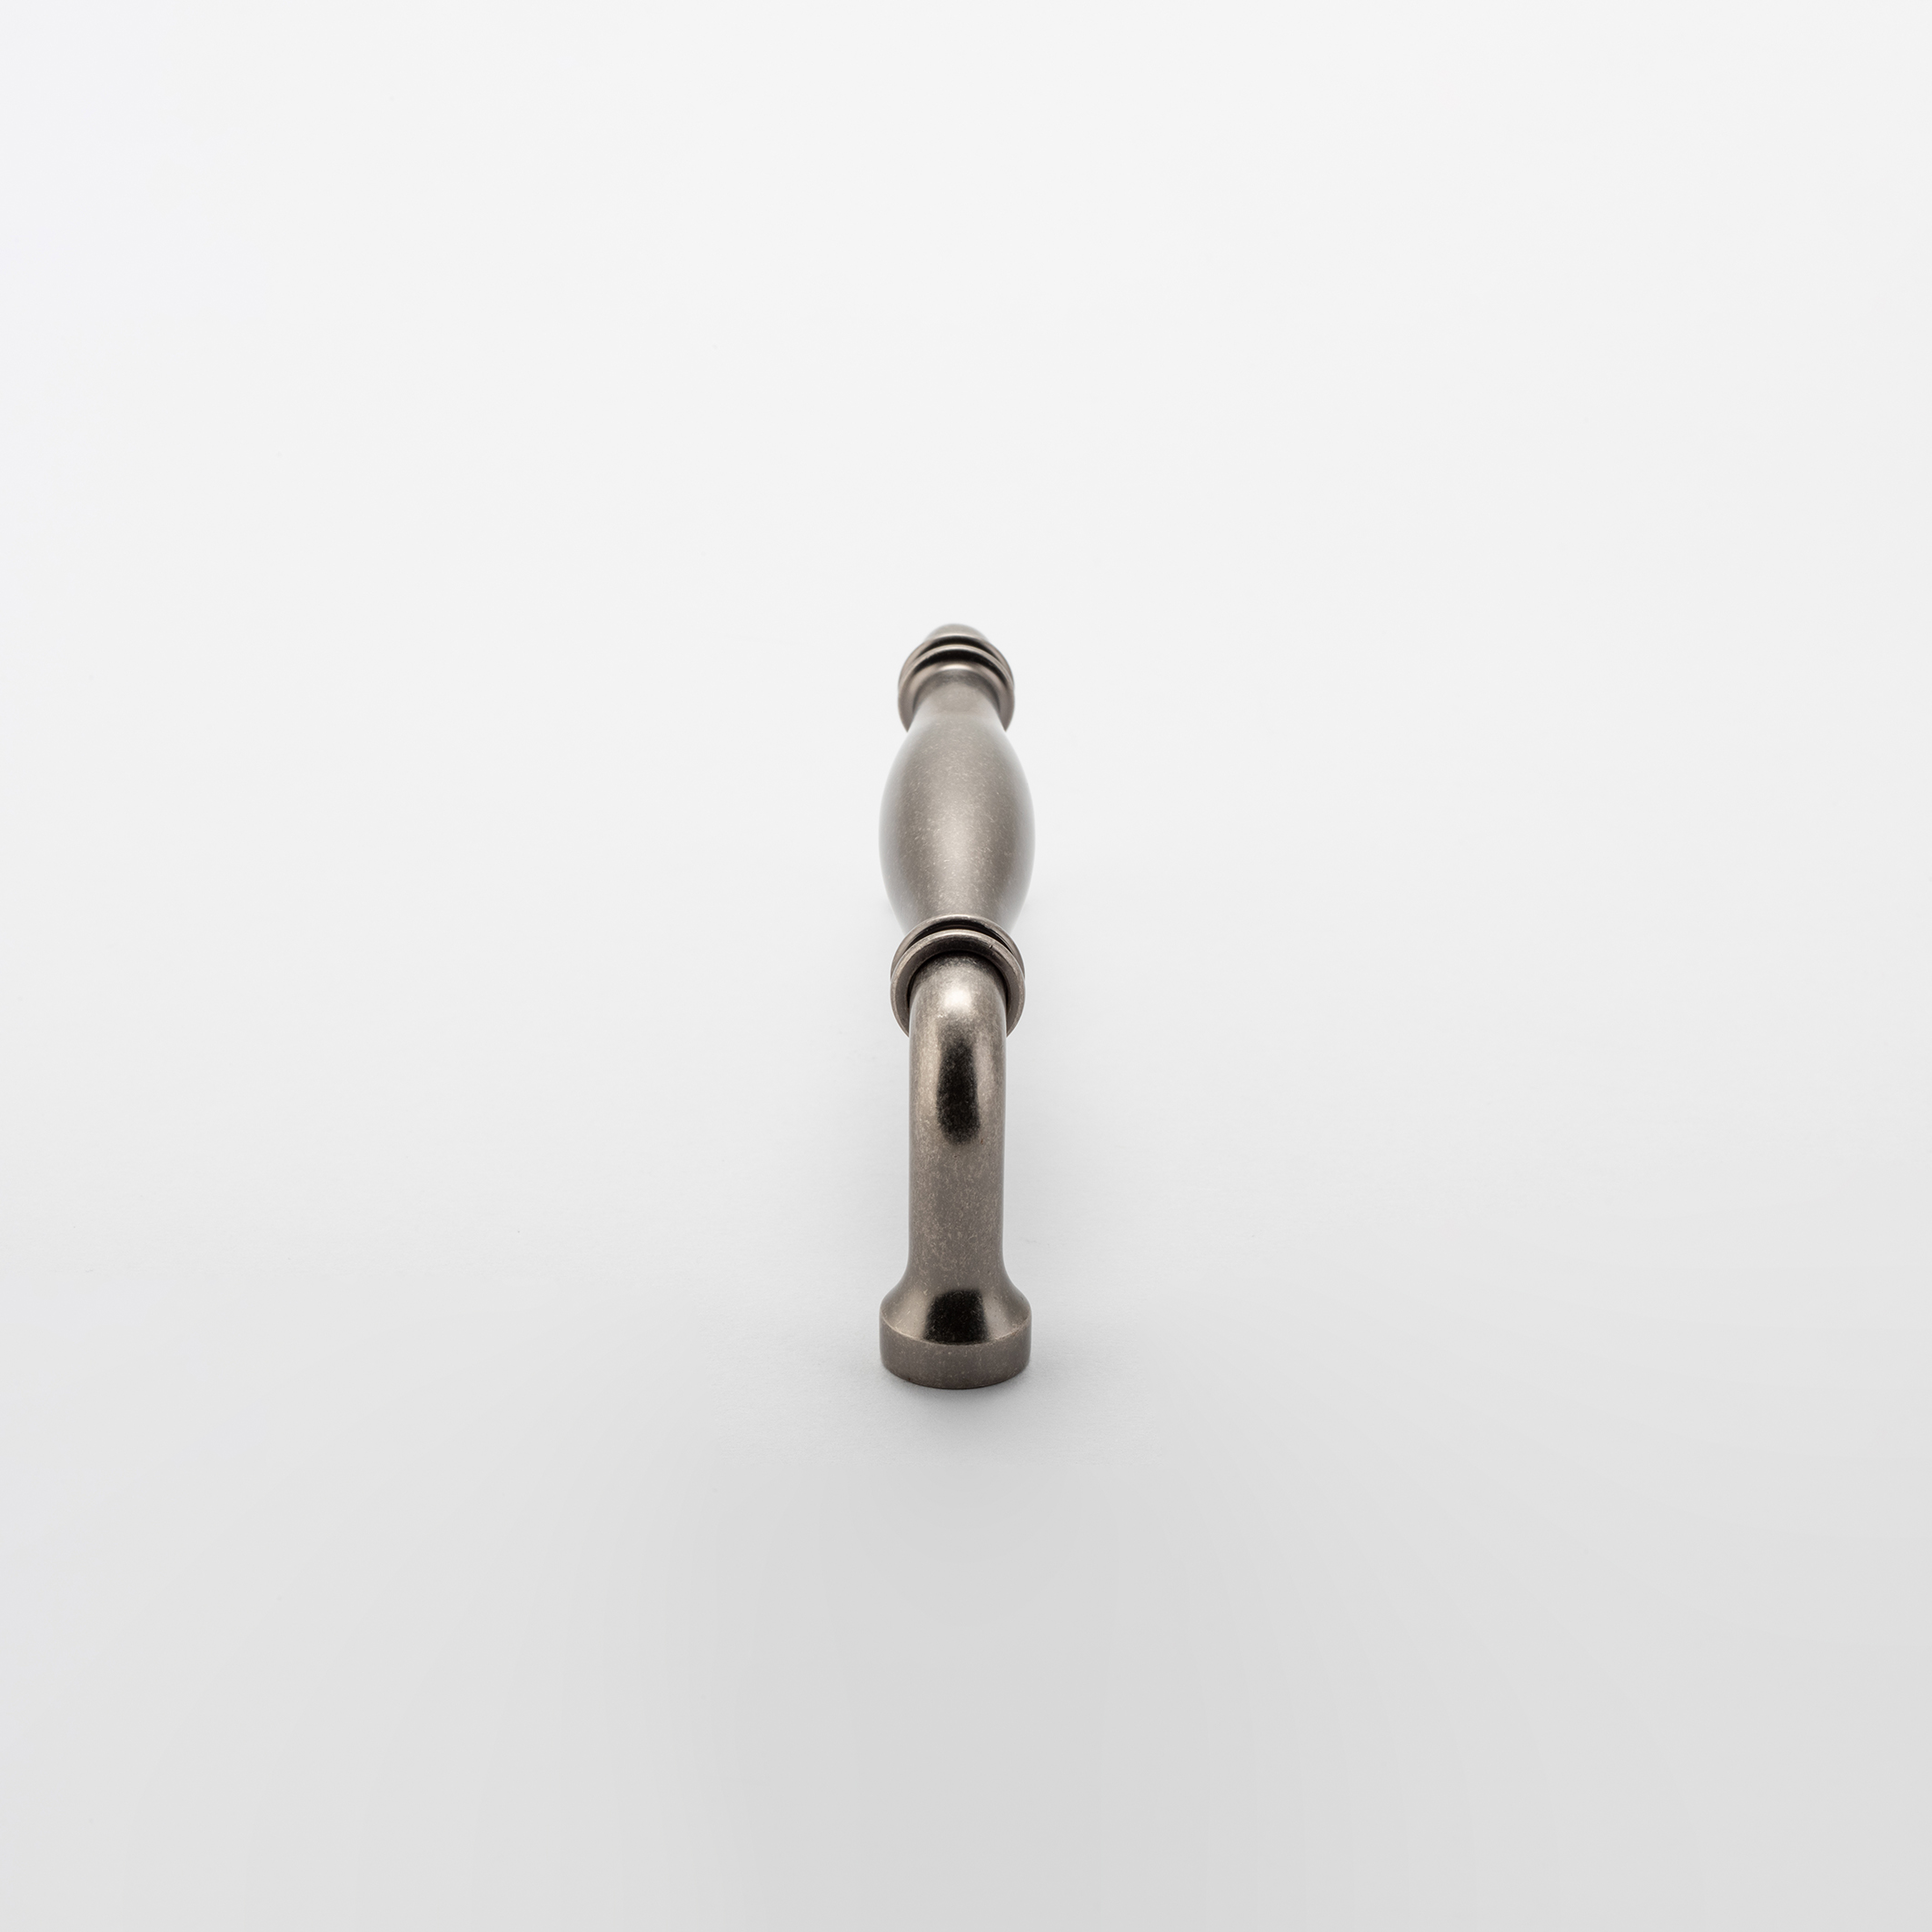 21107 - Sarlat Cabinet Pull - CTC450mm - Distressed Nickel